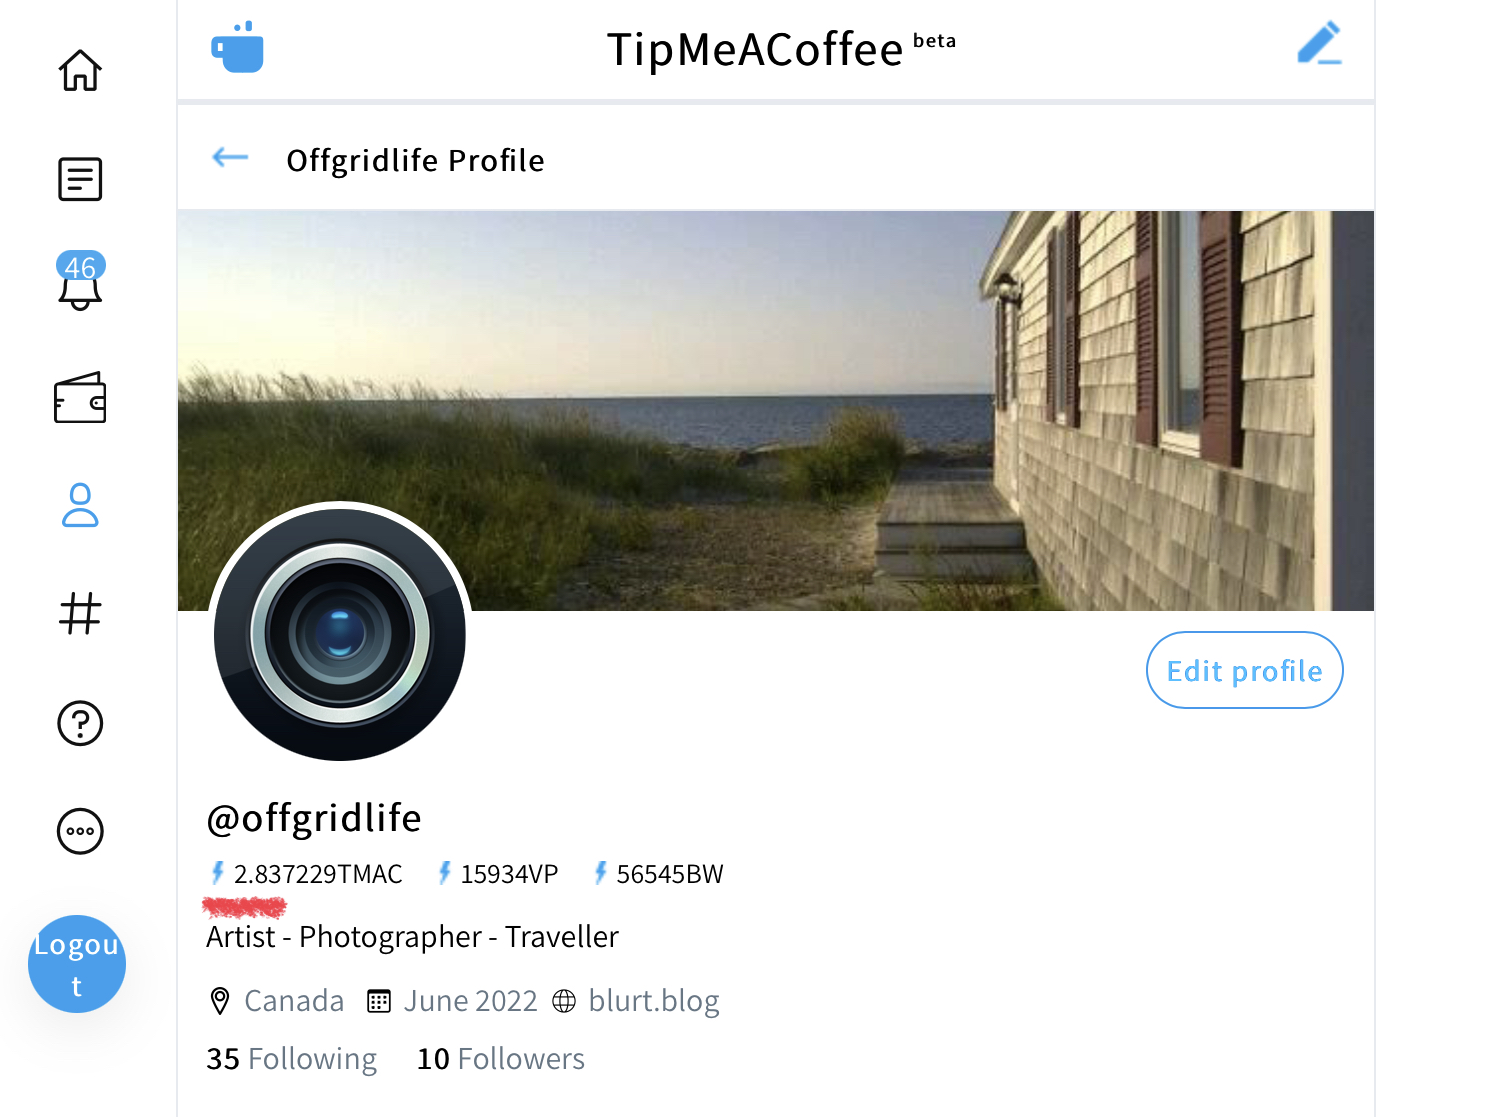 earn-tmac-blurt-steem-hive-tron-etc-sharing-your-blog-links-on-tipmeacoffee-blurt